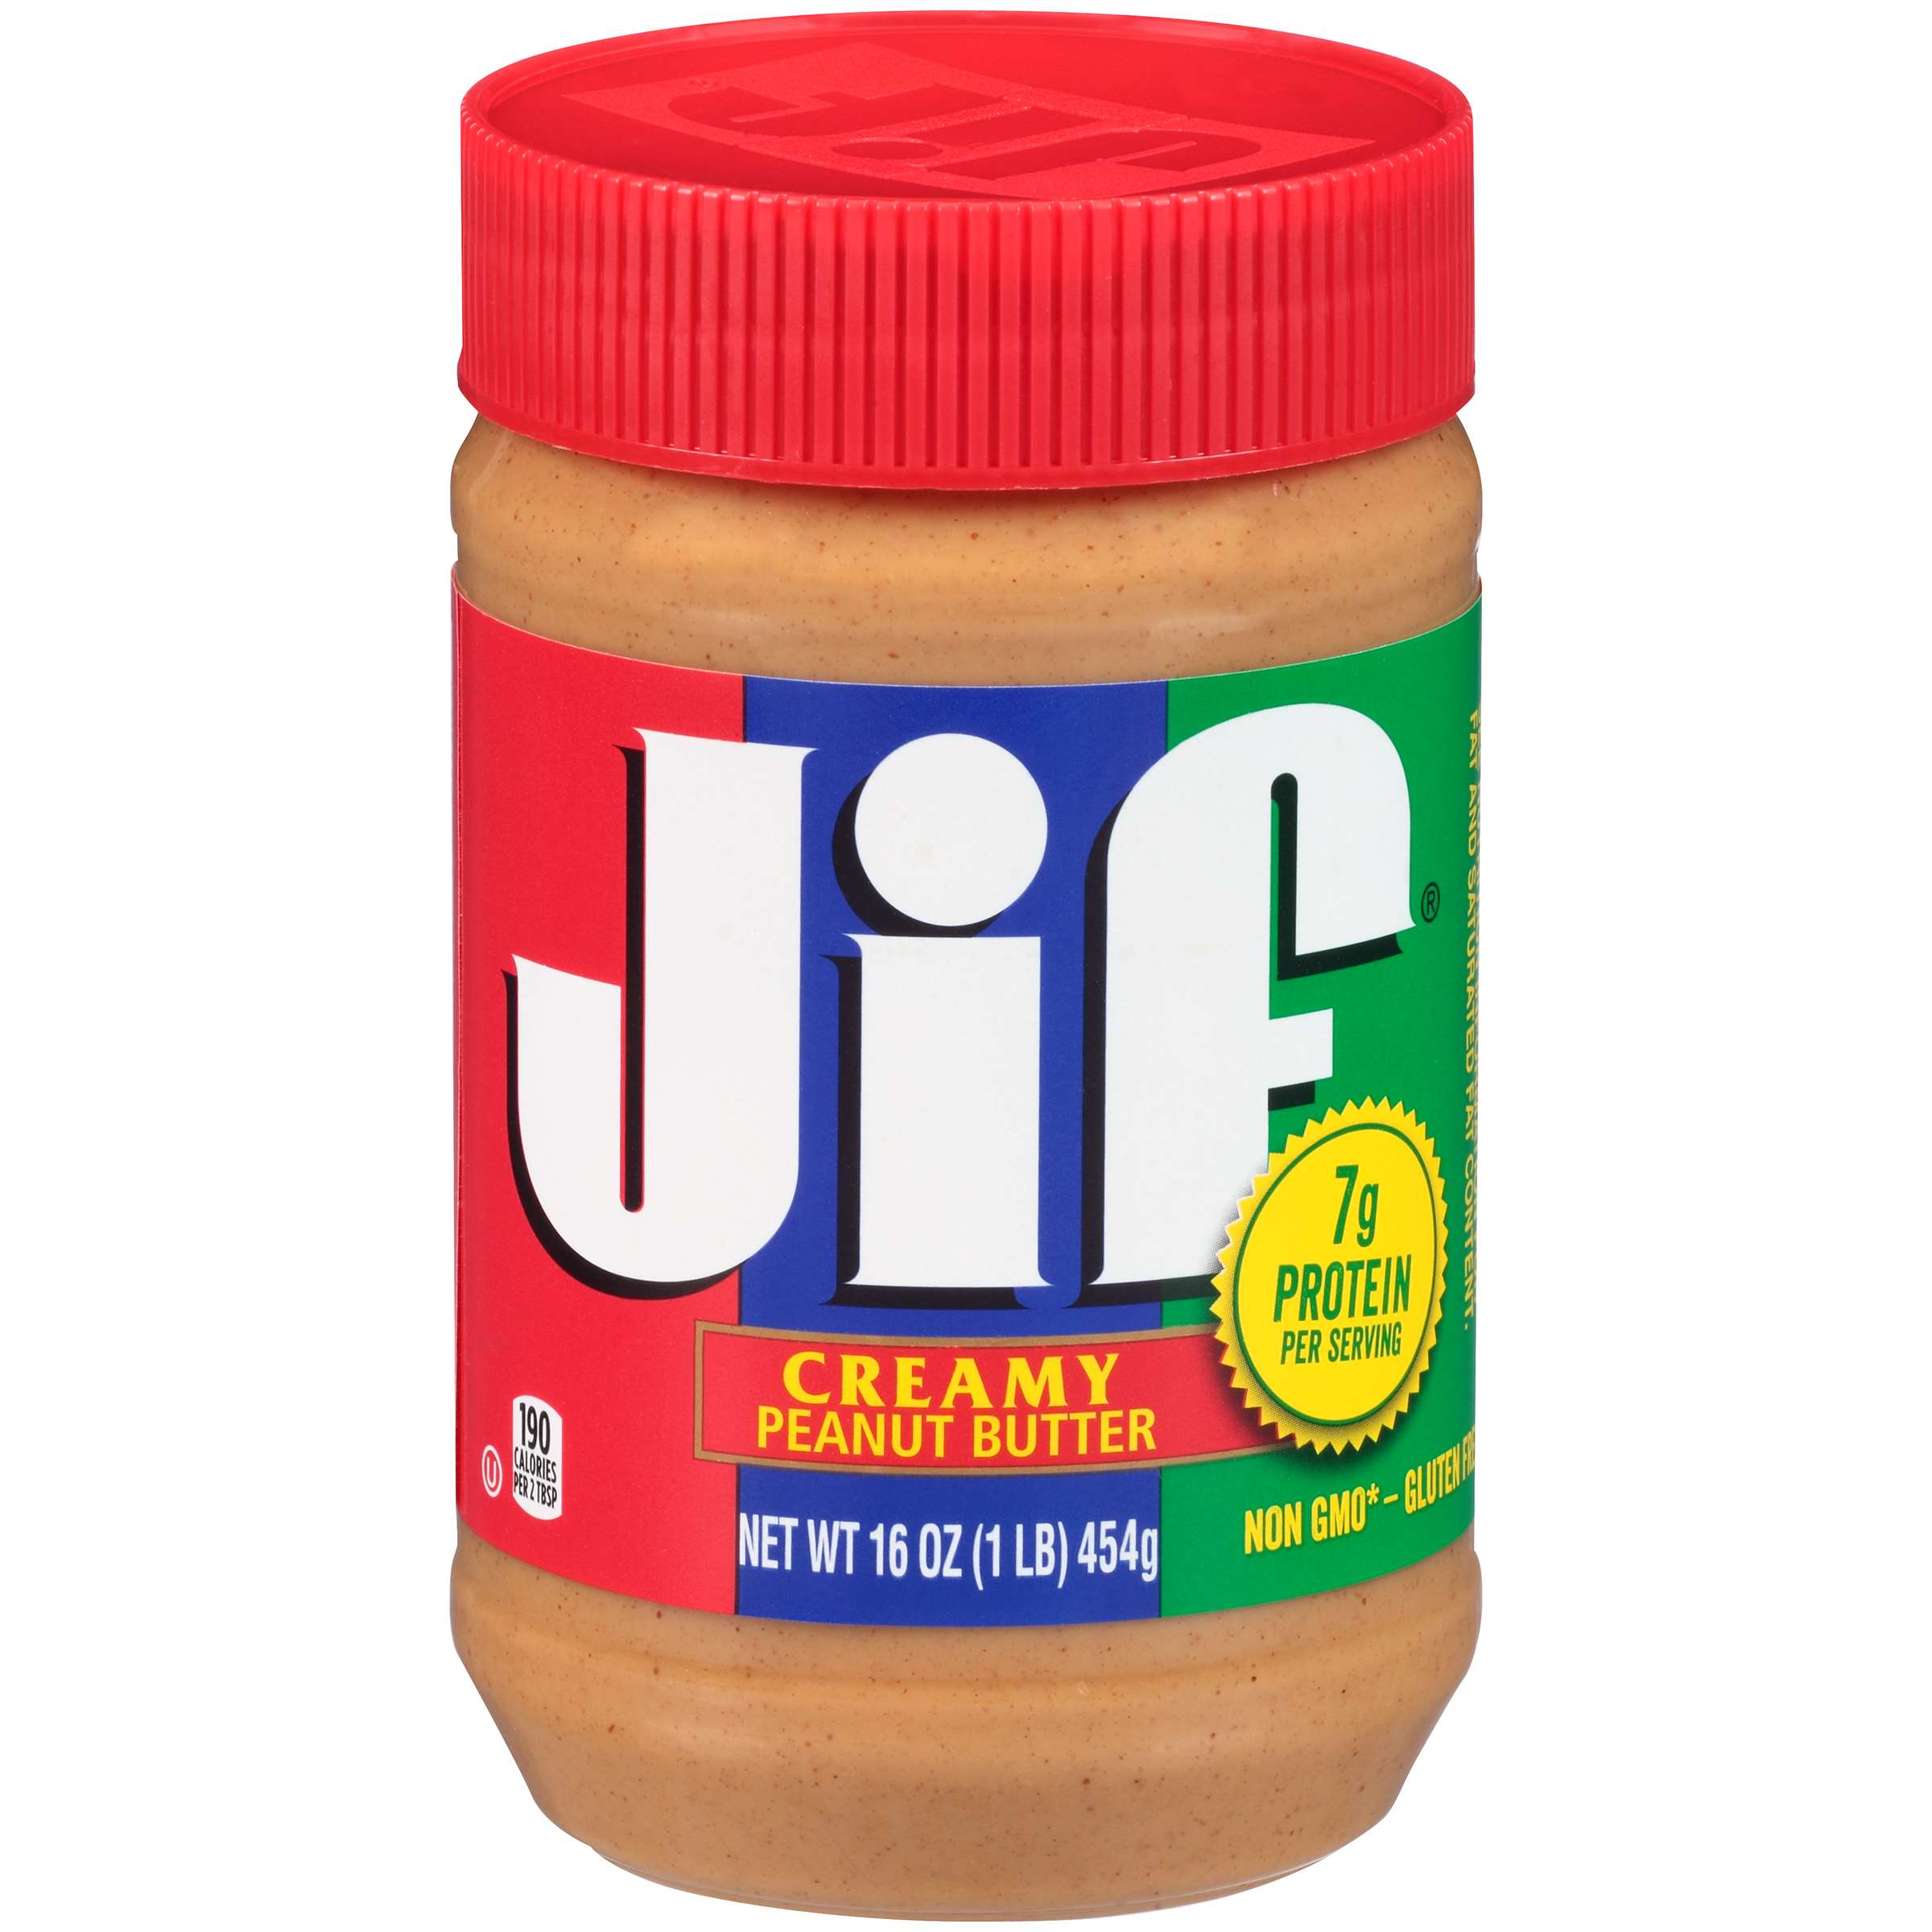 Peanut Butter Creamy Jif 12/16oz - Sold by EA